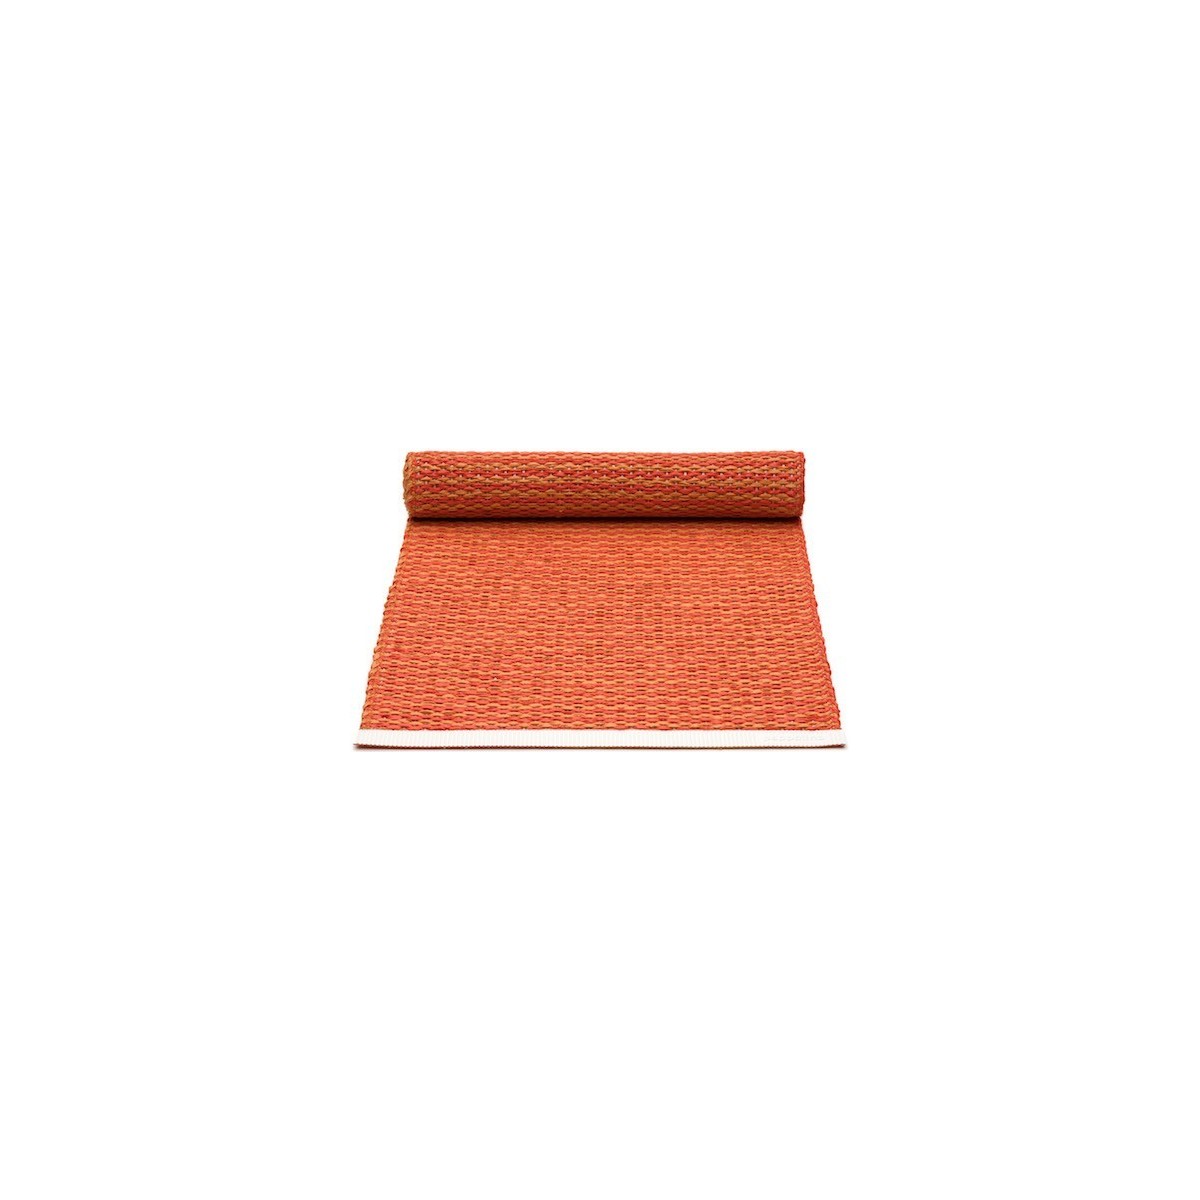 36x60cm - pale orange / coral red - Mono table runner